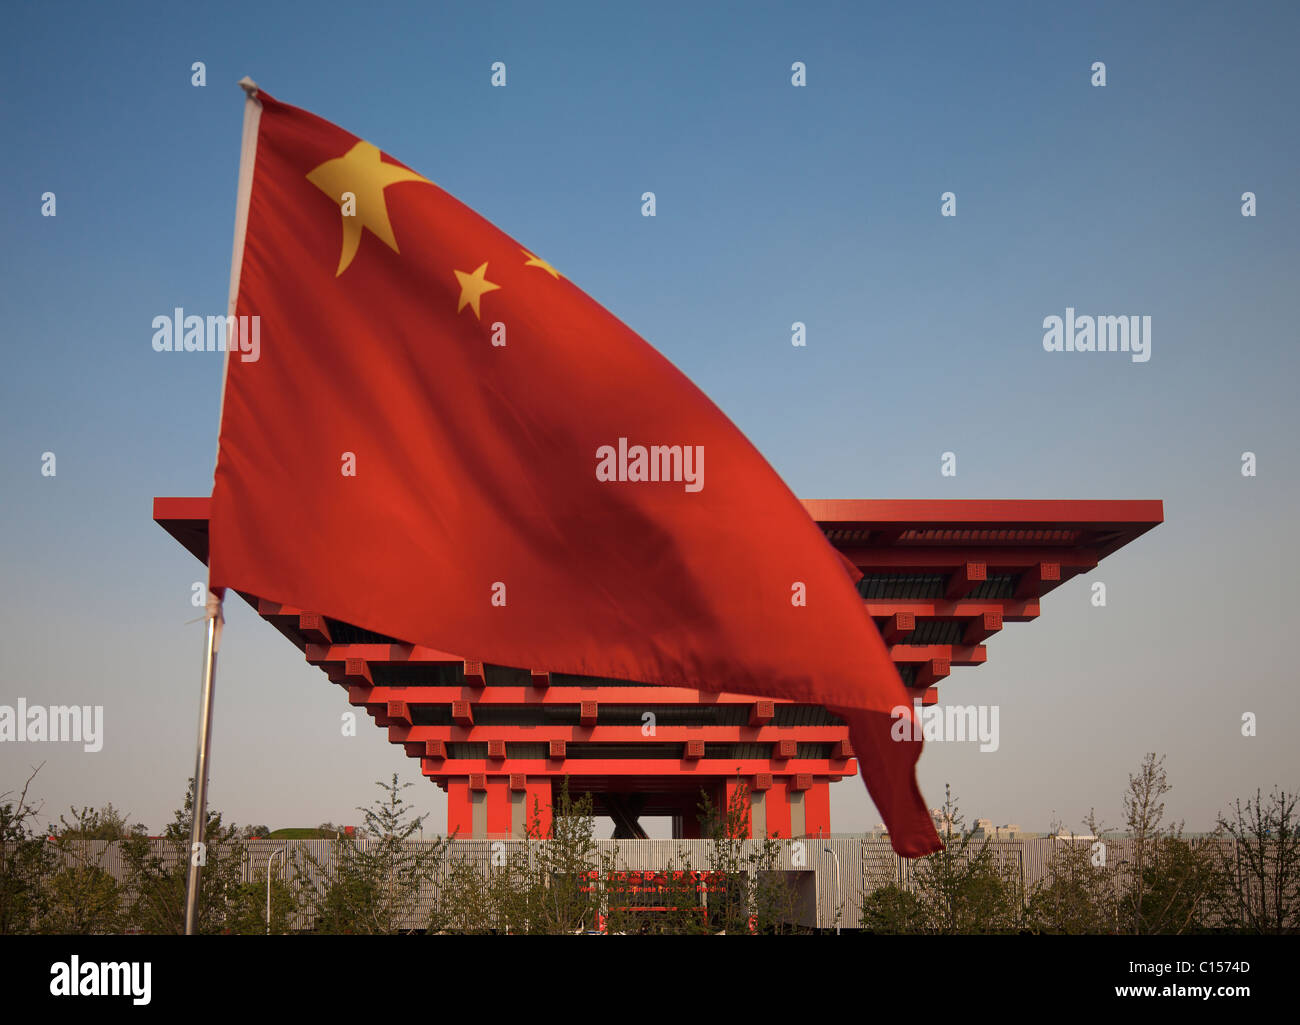 The China pavilion, Shanghai World Expo 2010, China. Stock Photo